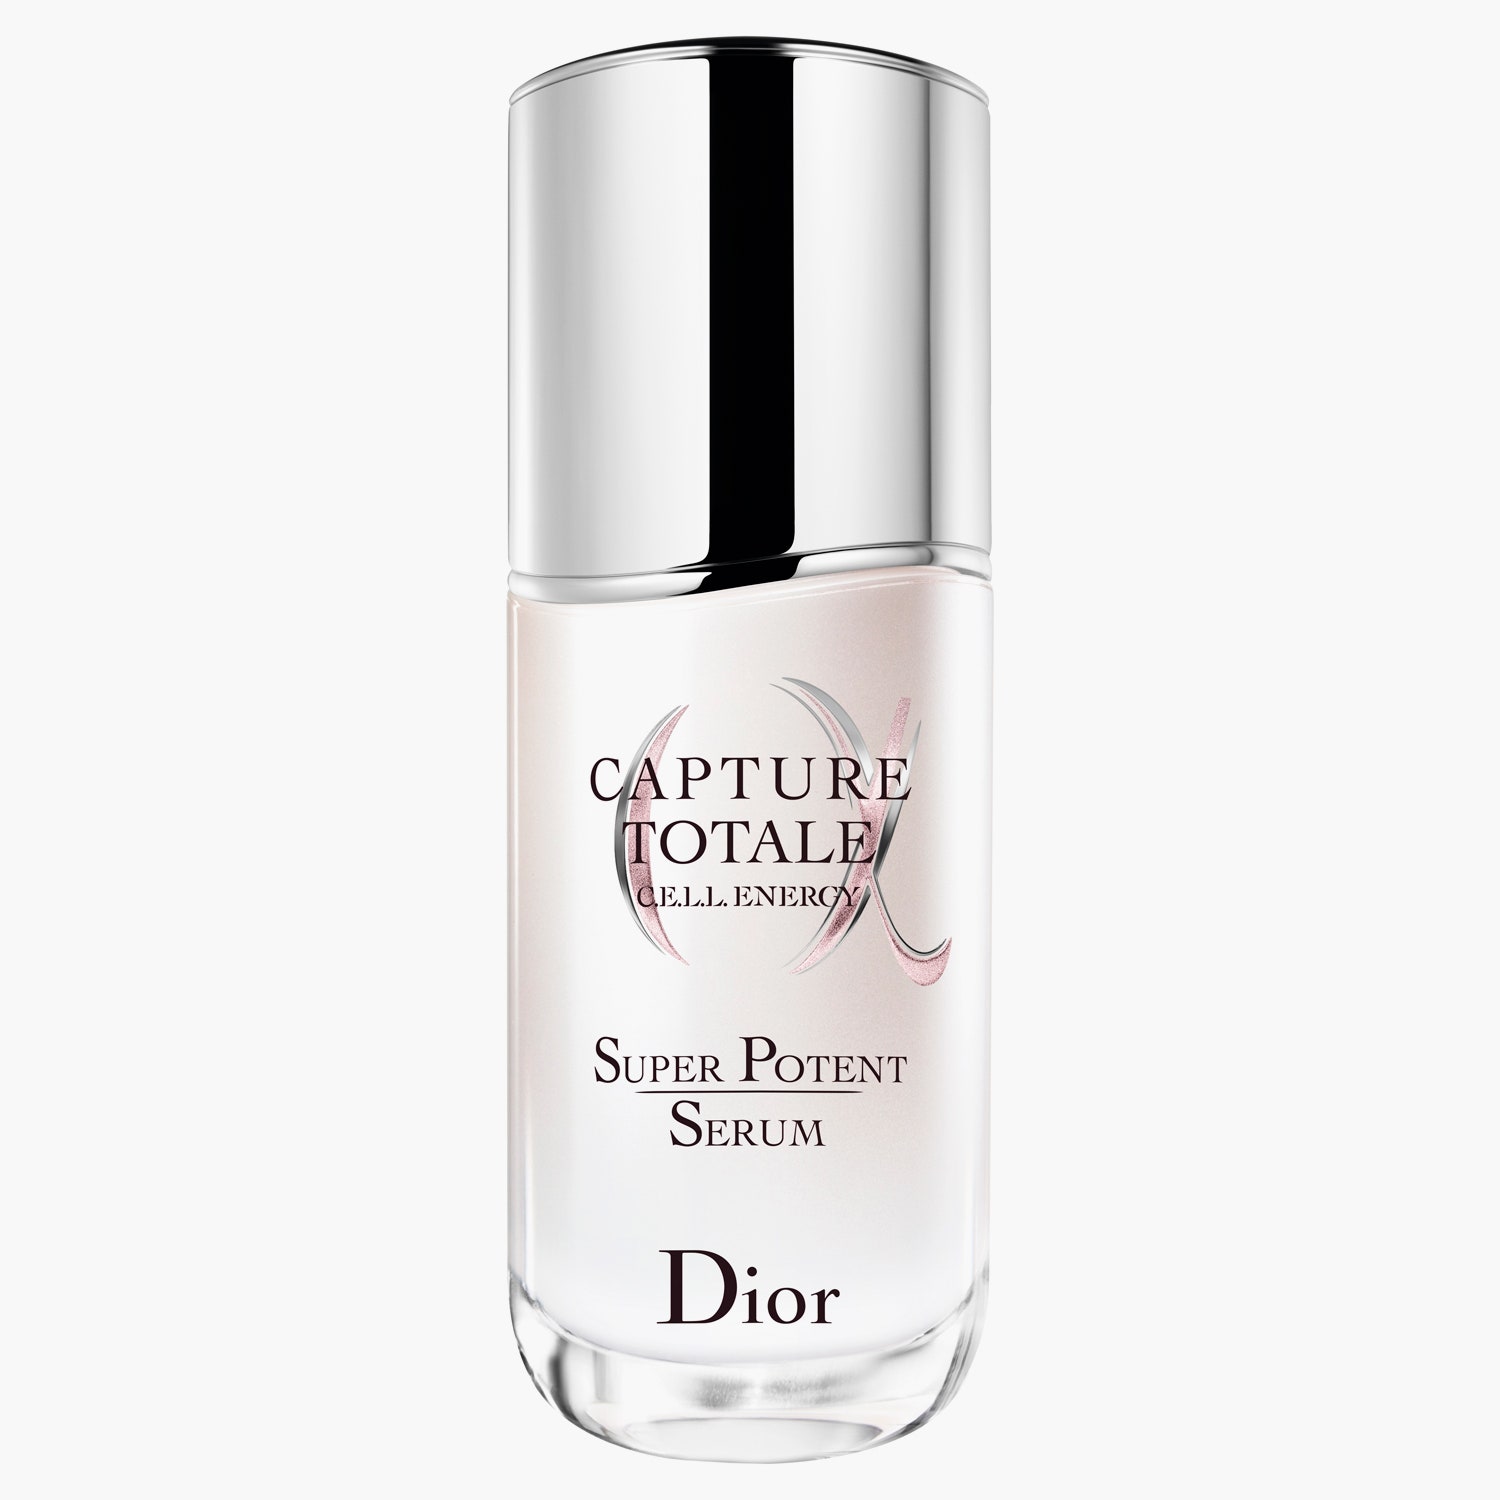 Сыворотка CaptureTotale Super Potent Serum Dior 10128 рублей